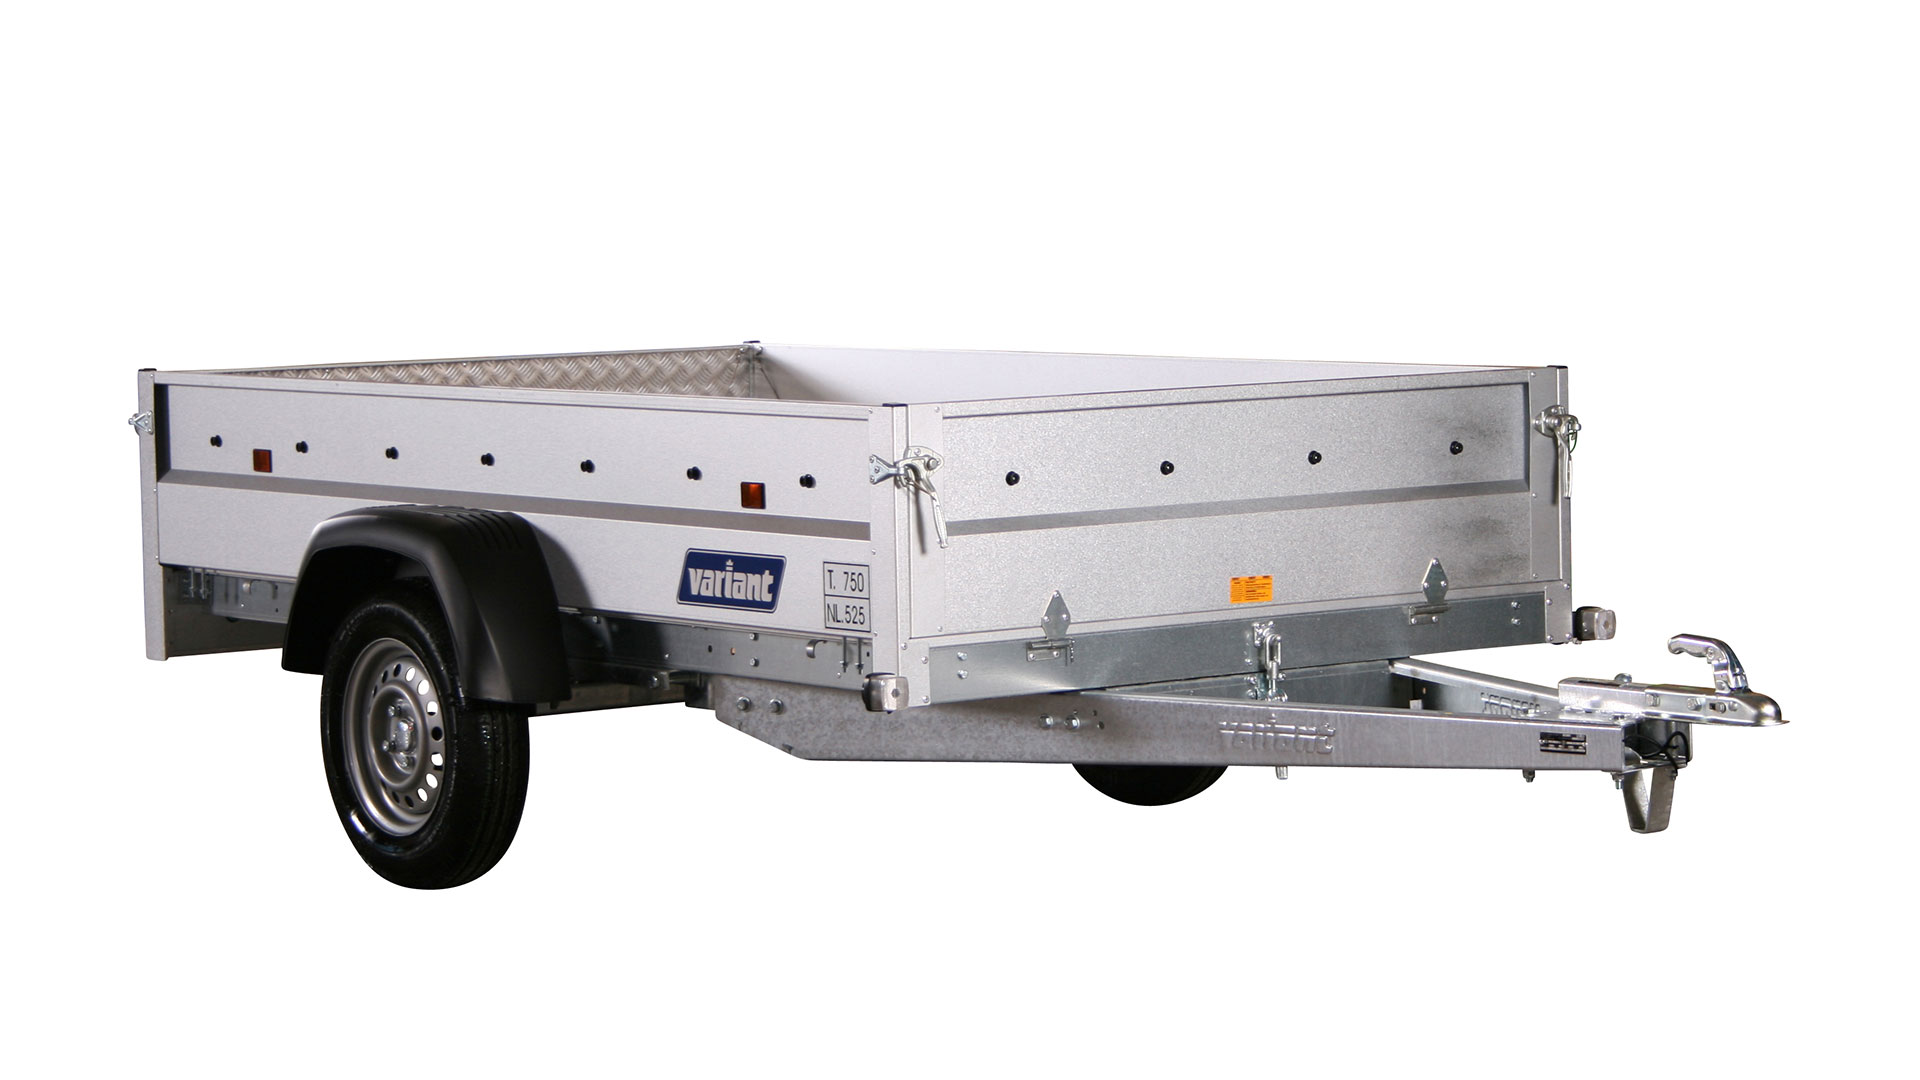 Variant PKW Anhänger Maschinentransporter 754 Tip, kippbar,750 kg, Ladefläche 2,55 x 1,45 m, Stahlbordwände